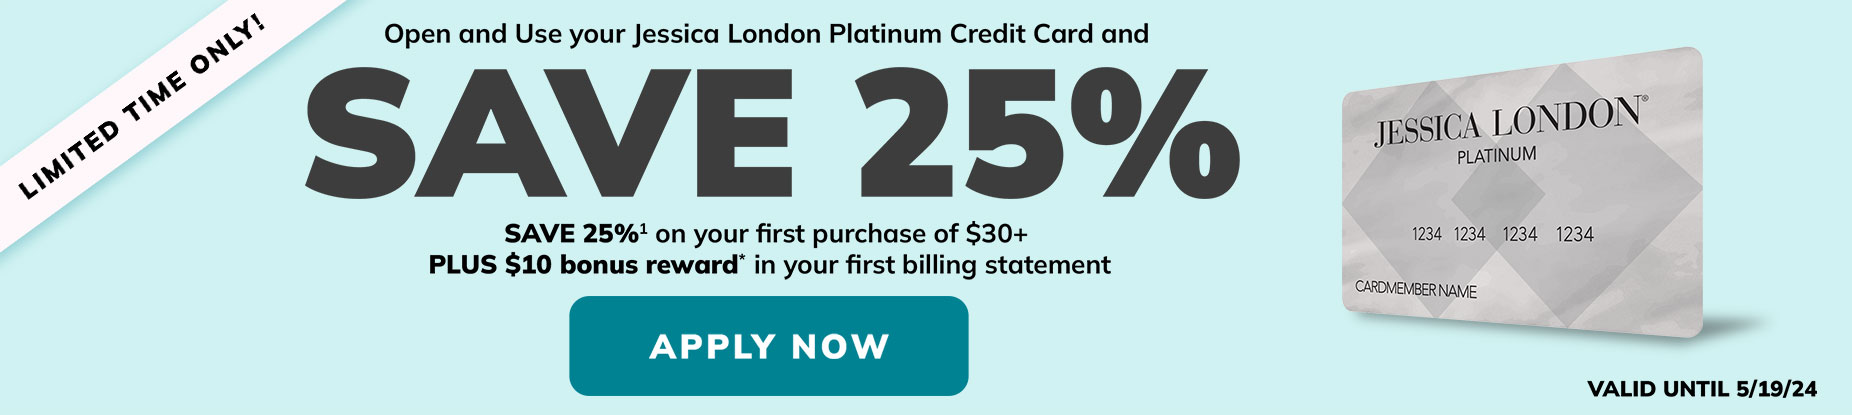 Jessica London Platinum Credit Card - Save 25%